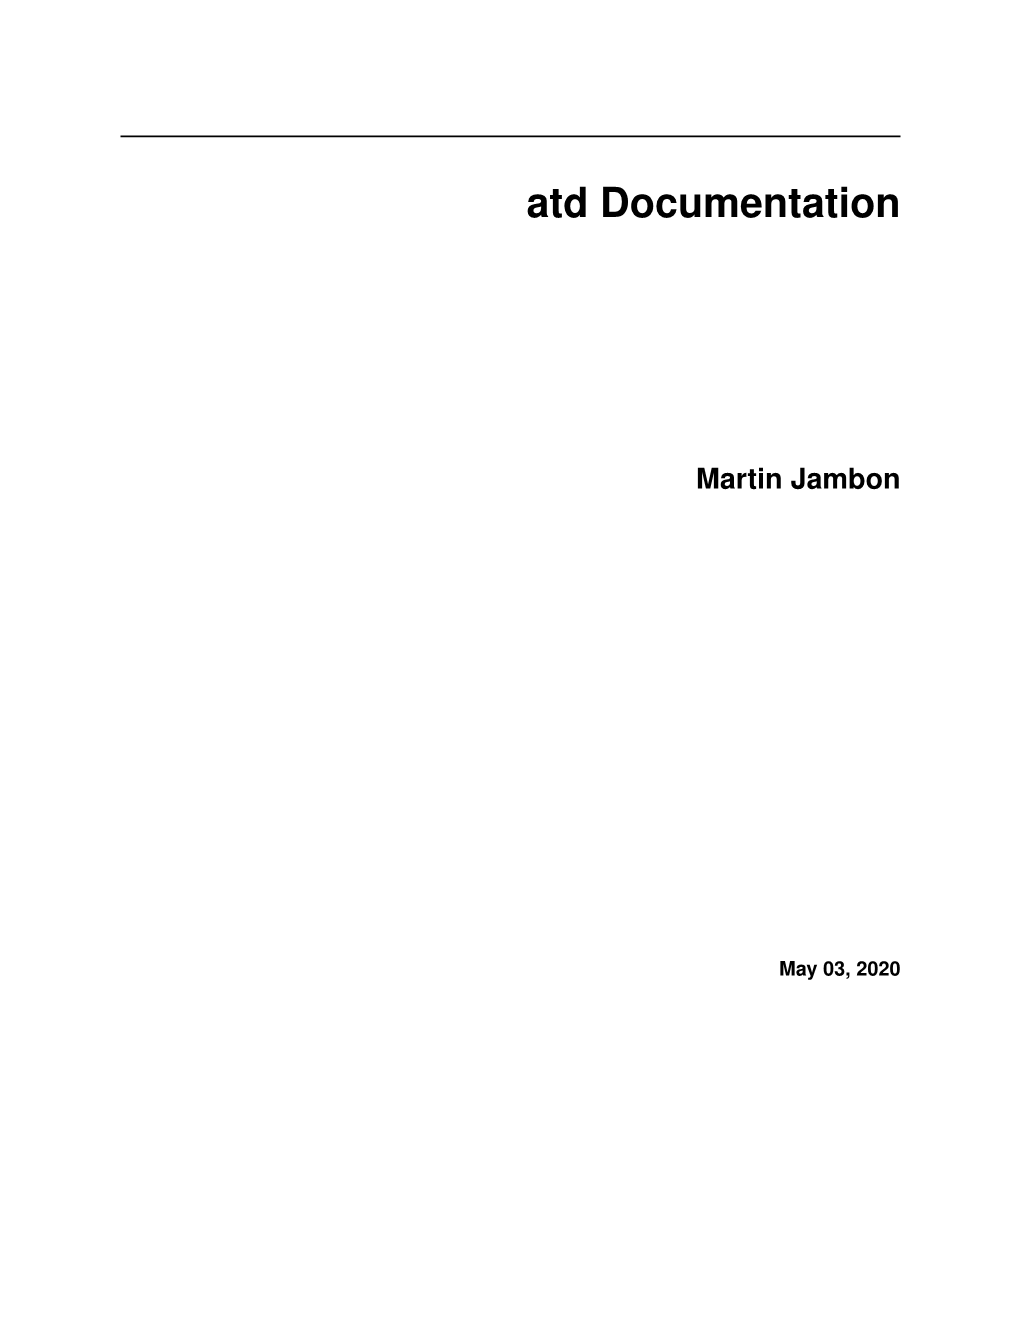 Atd Documentation Martin Jambon